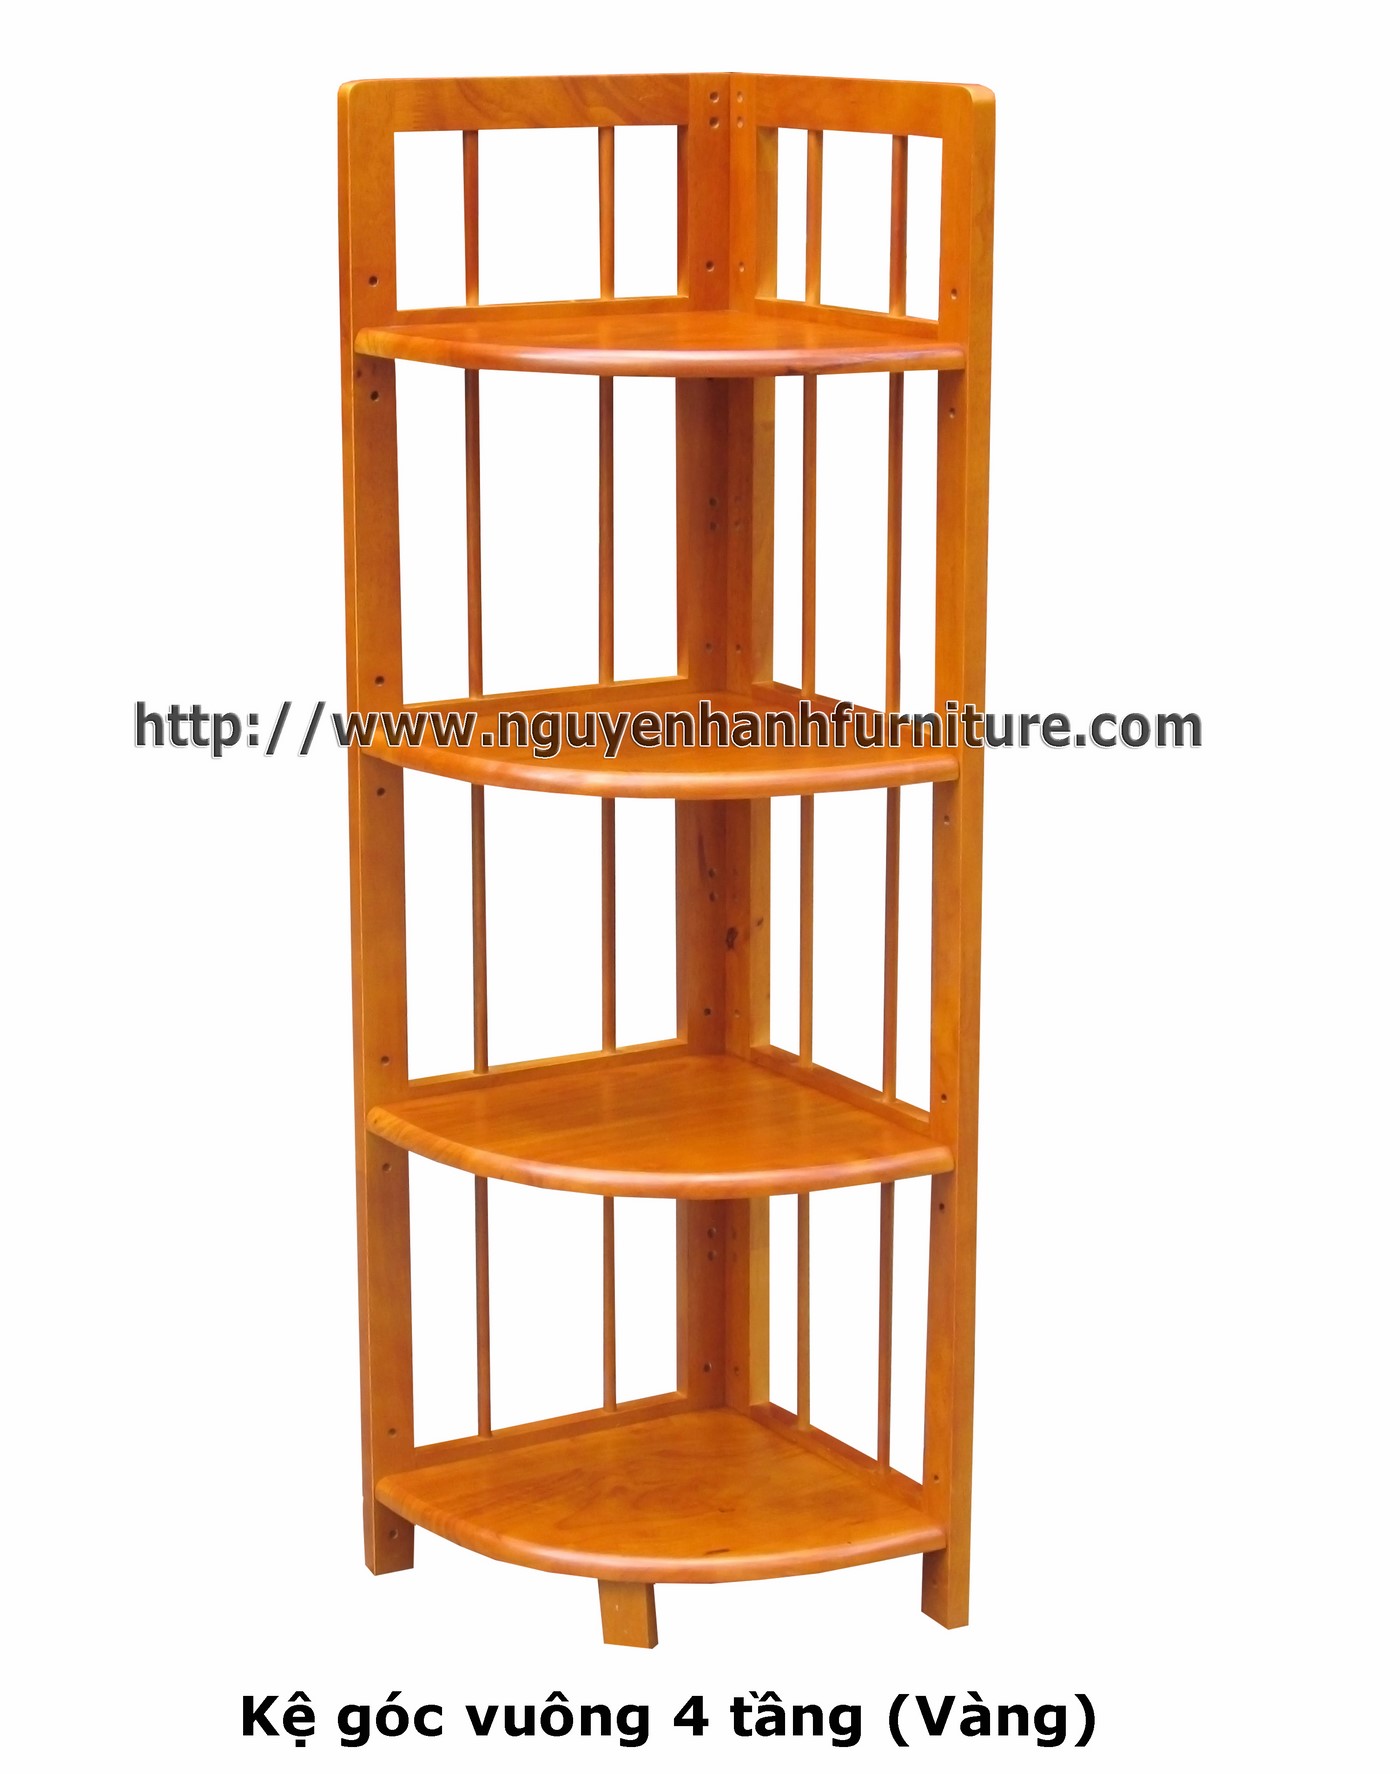 Name product: Square corner shelf 4 floors (yellow) - Dimensions: 36 x 36 x 120 (H) - Description: Wood natural rubber